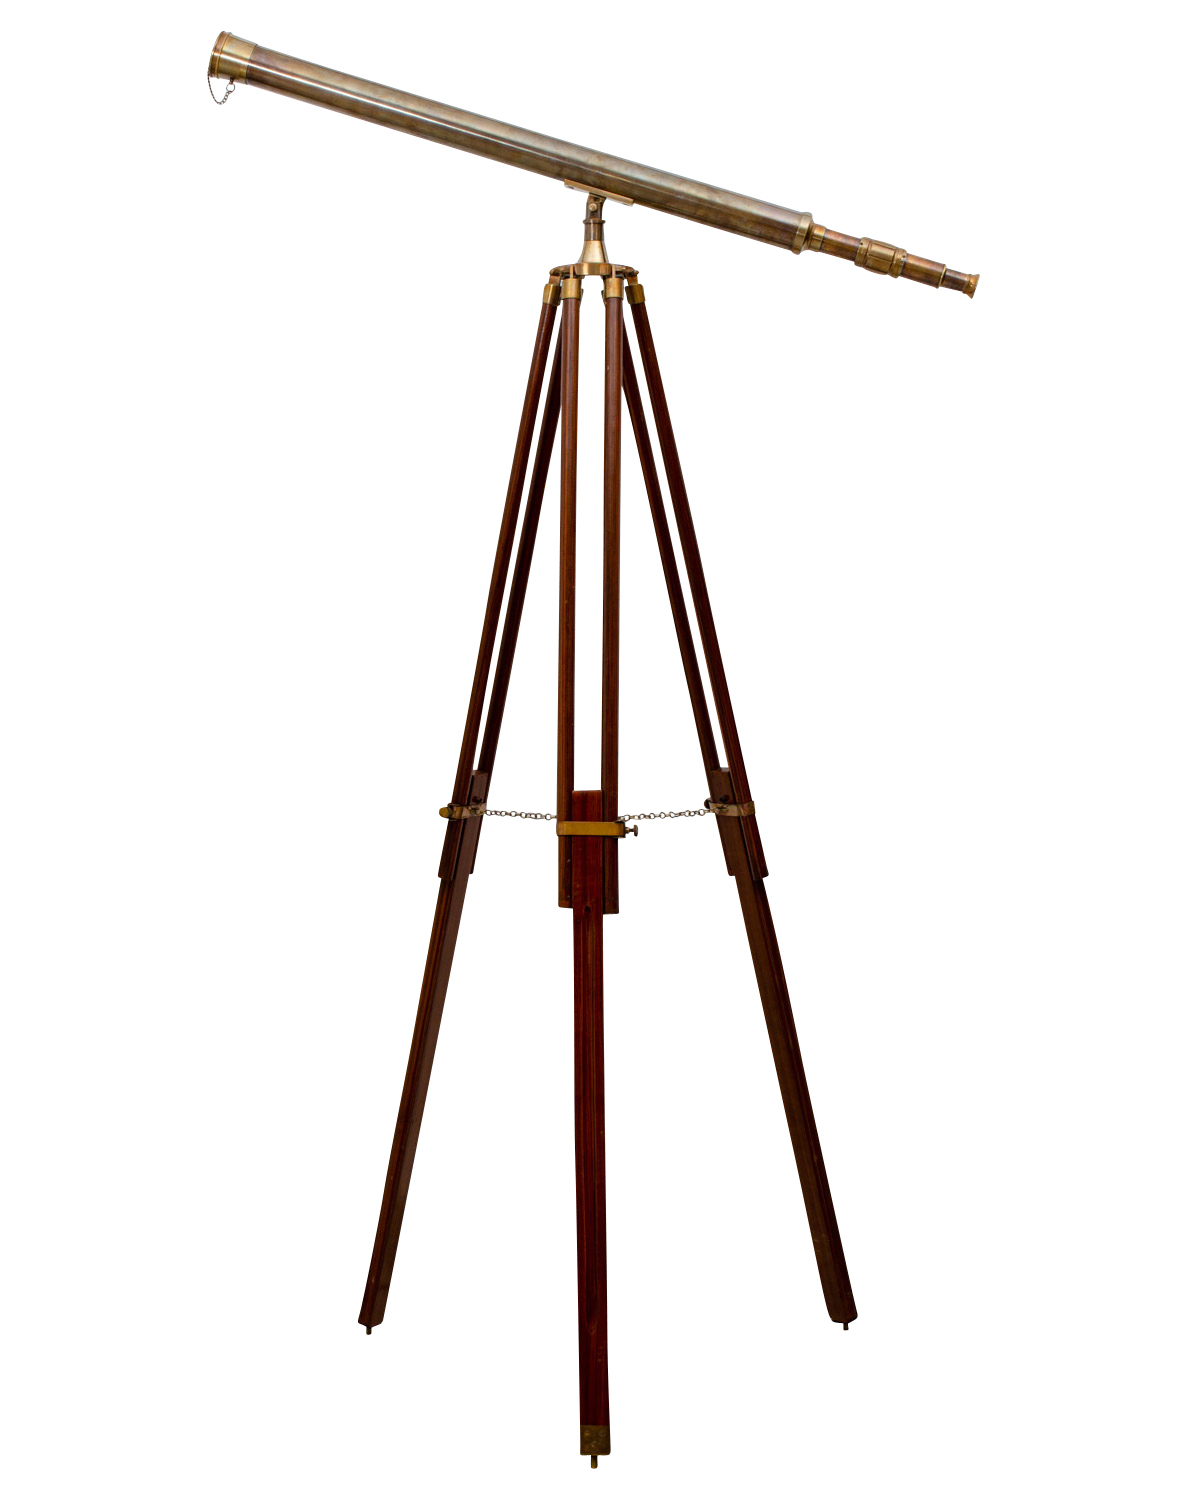 Fernrohr Messing 49cm mit Holzbox Maritim Teleskop Monokular Fernglas antik Stil 